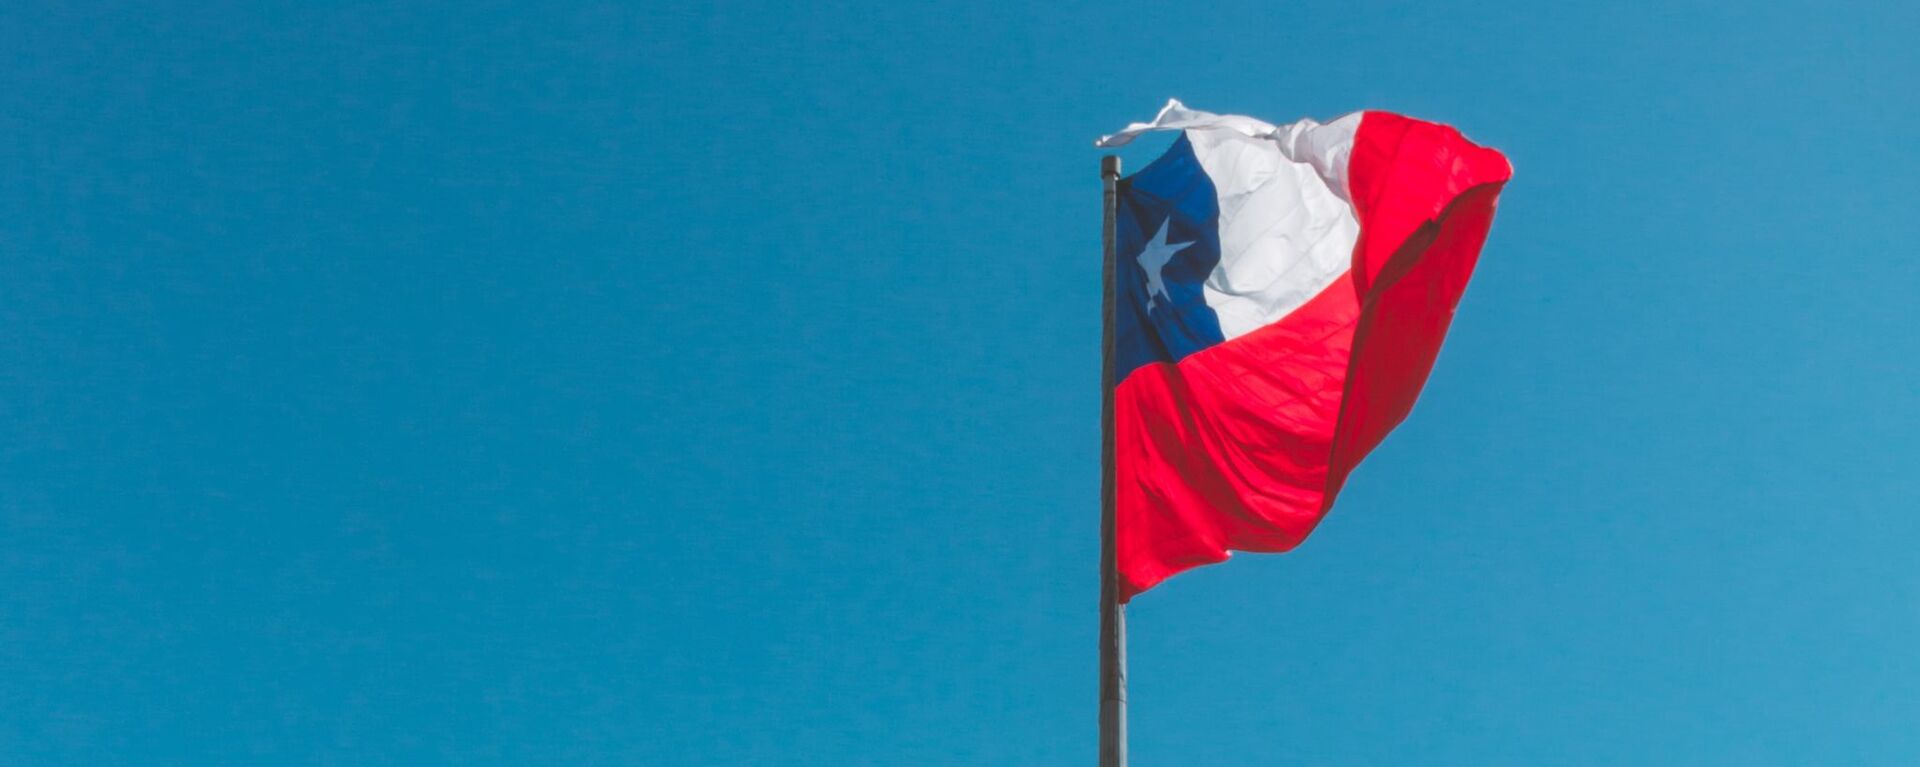 La bandera de Chile - Sputnik Mundo, 1920, 16.11.2021